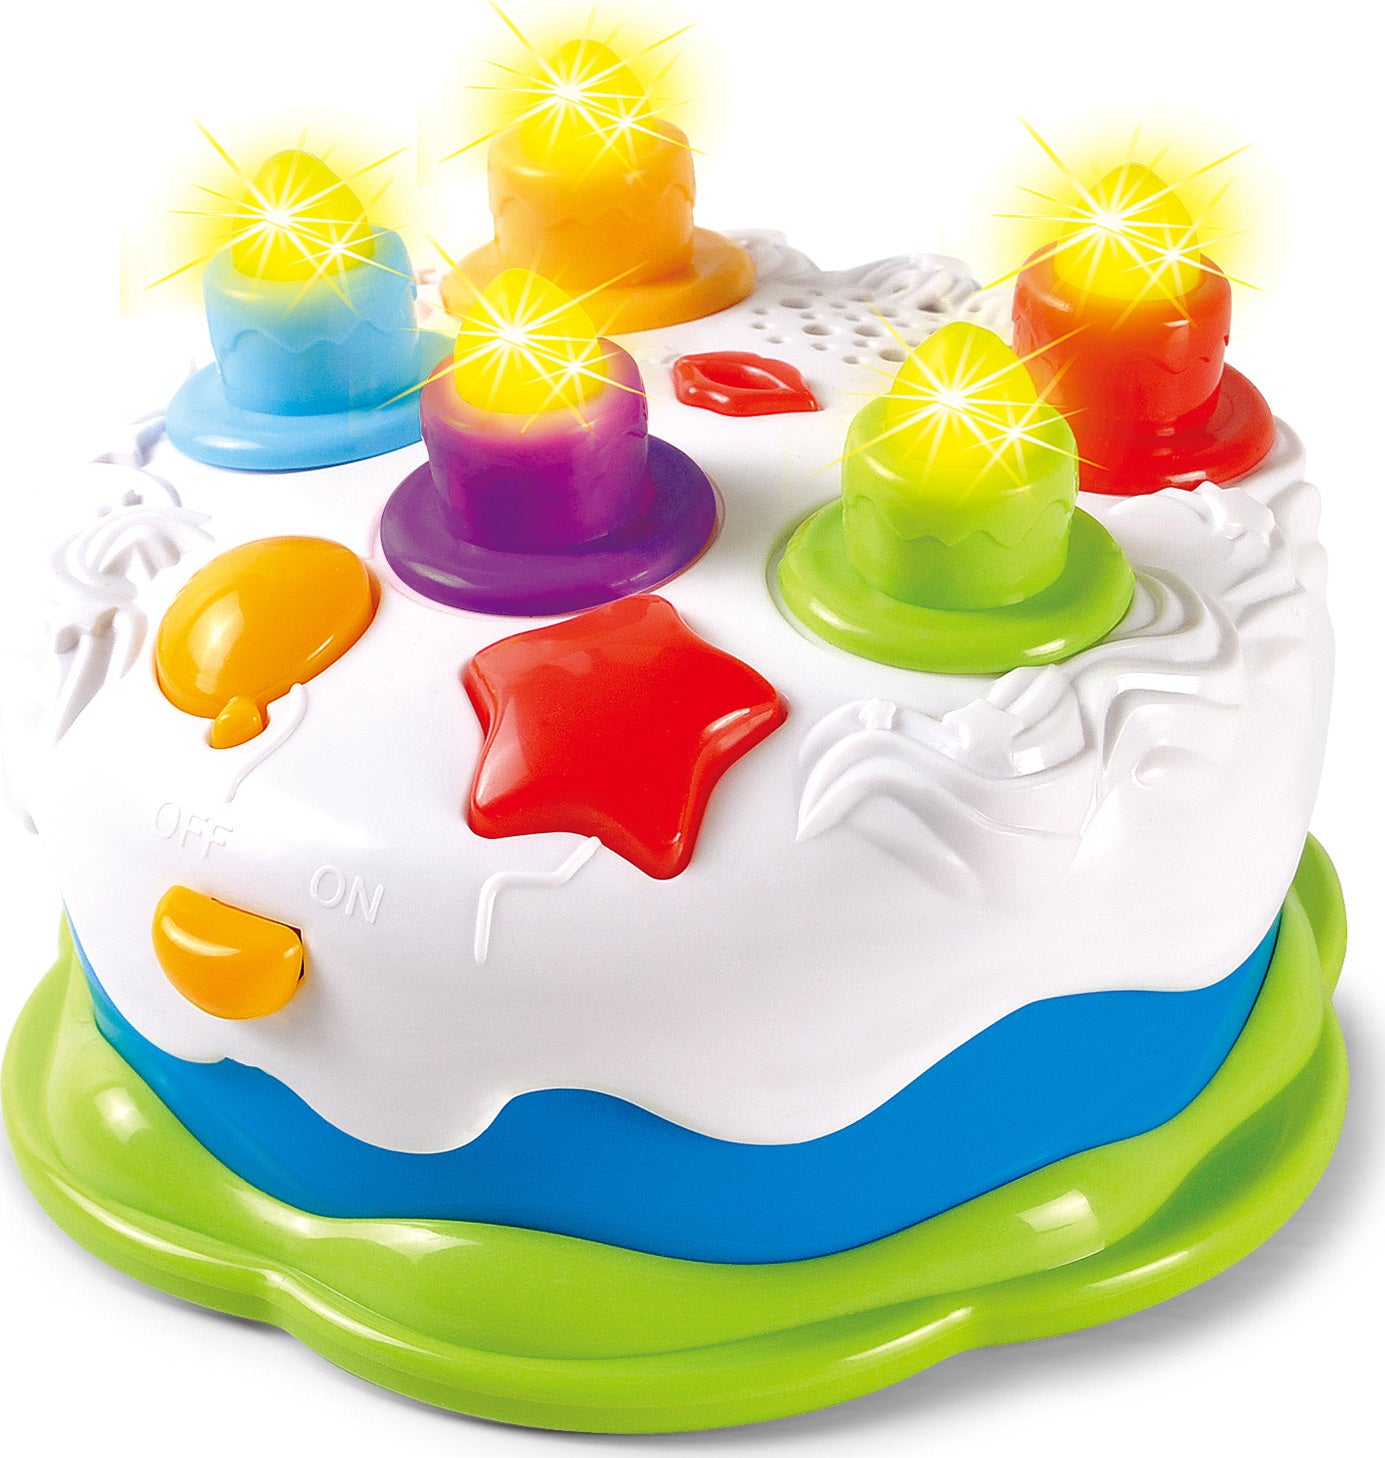 Make A Wish Birthday Cake